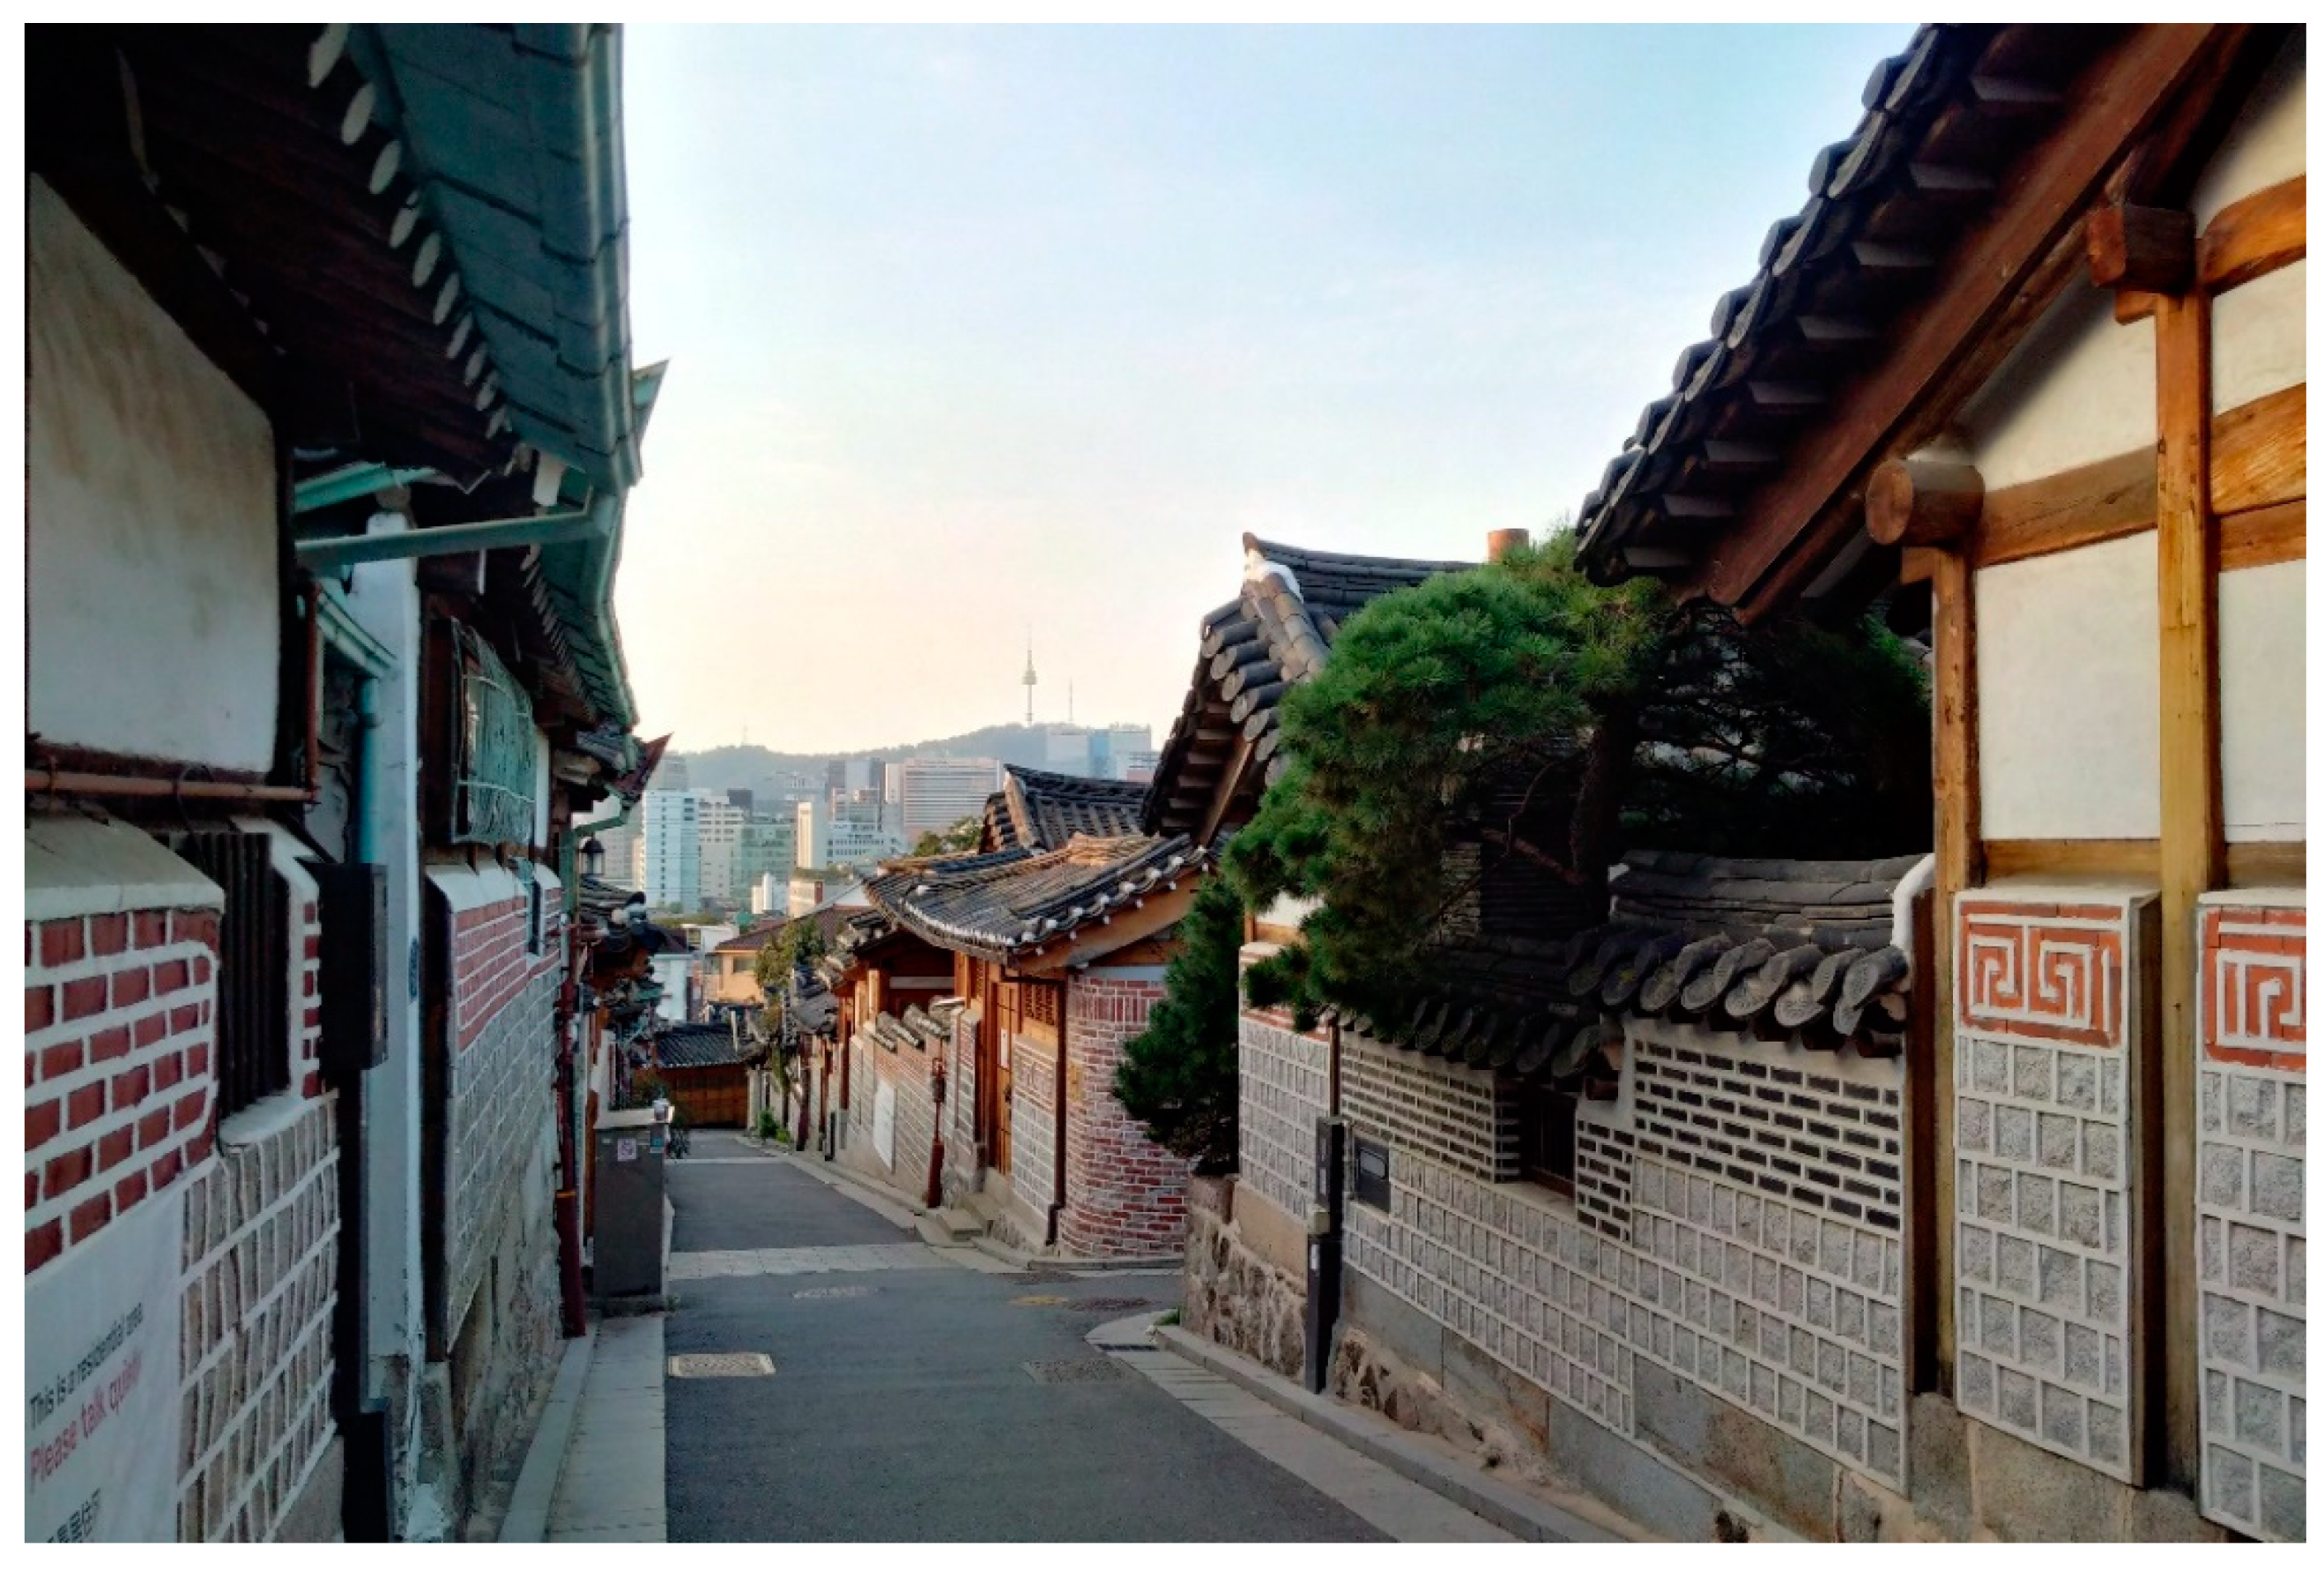 ancient korean architecture